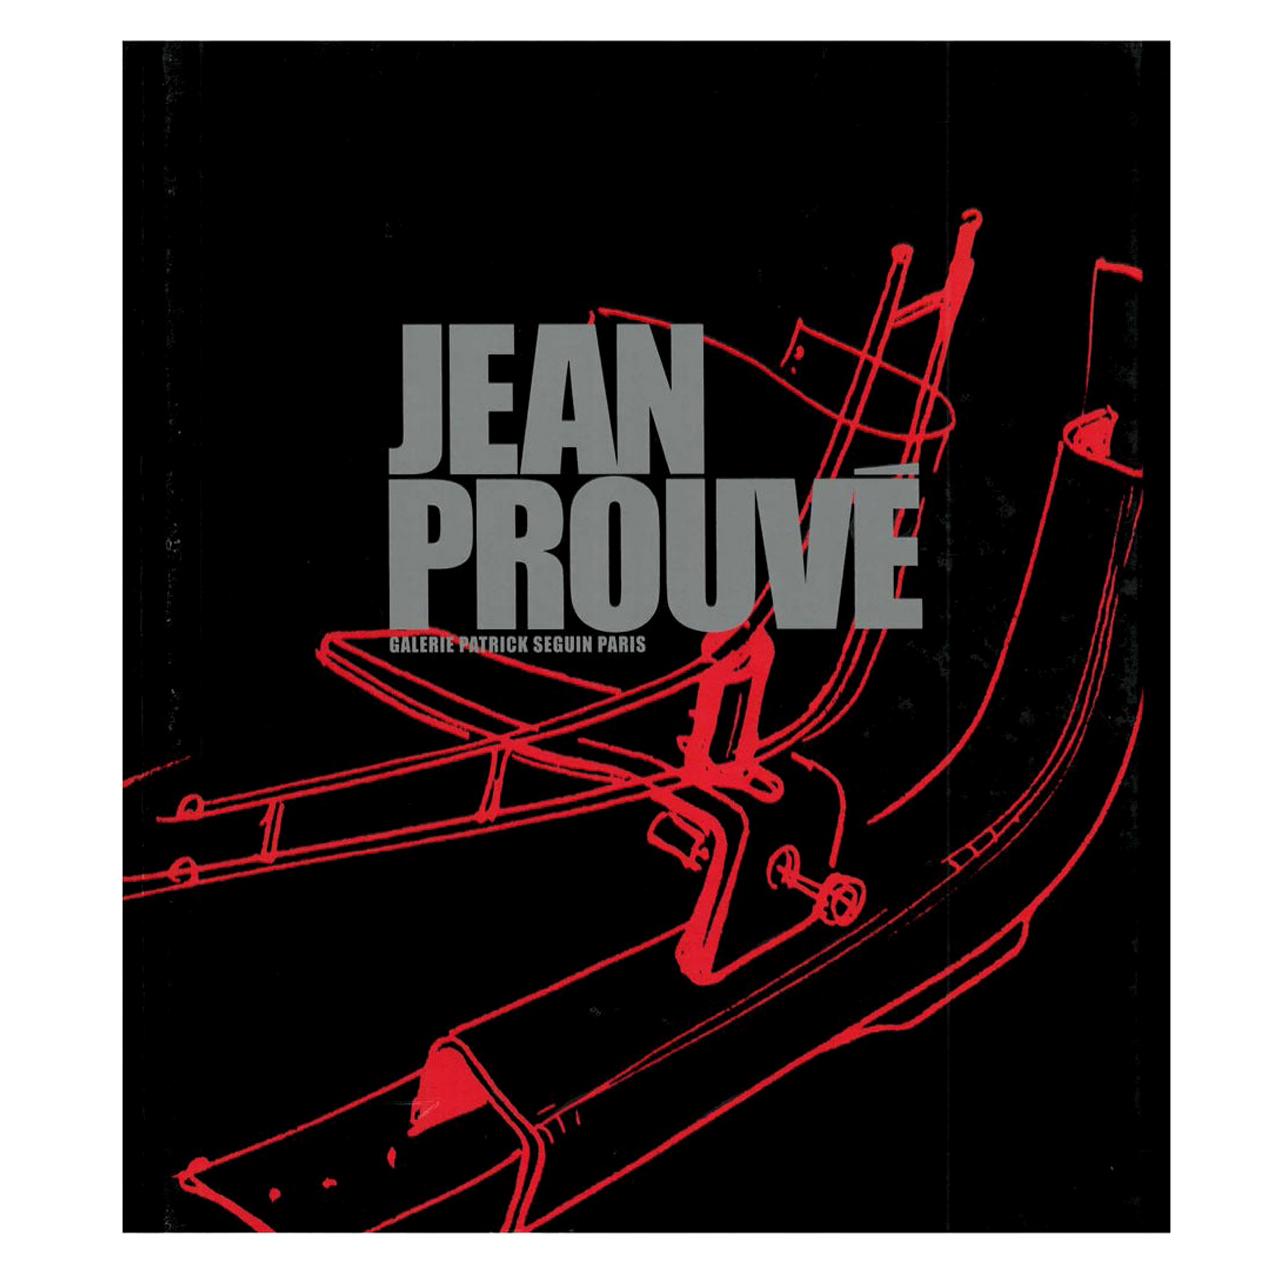 Jean Prouve 2 volumes (Book)